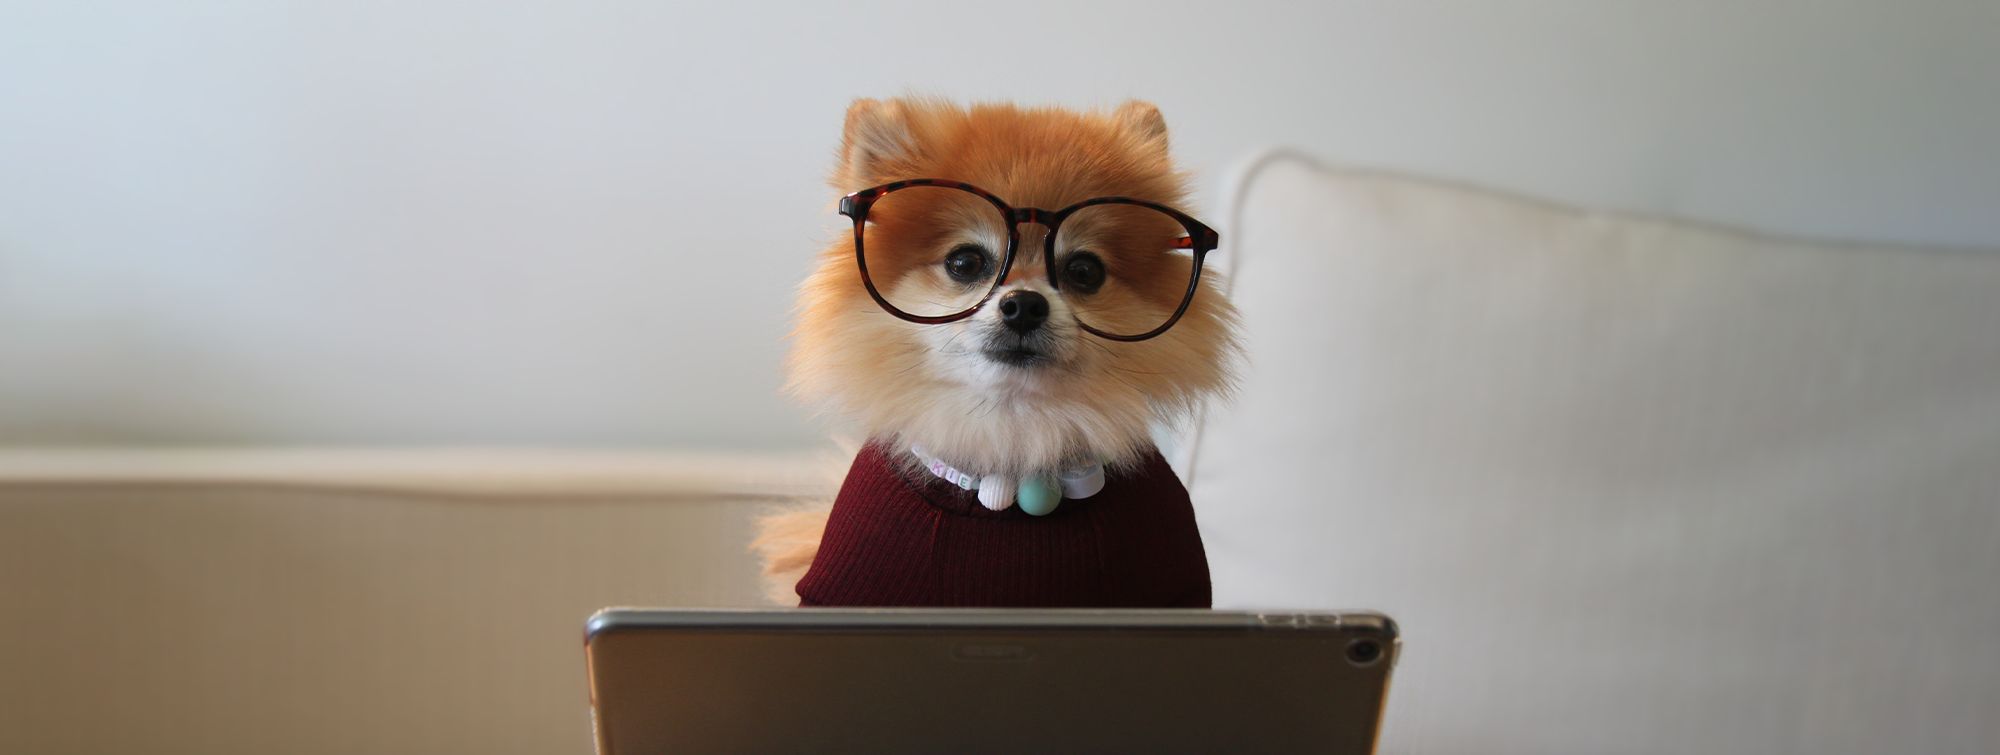 Pomeranian dog wearing eyeglasses